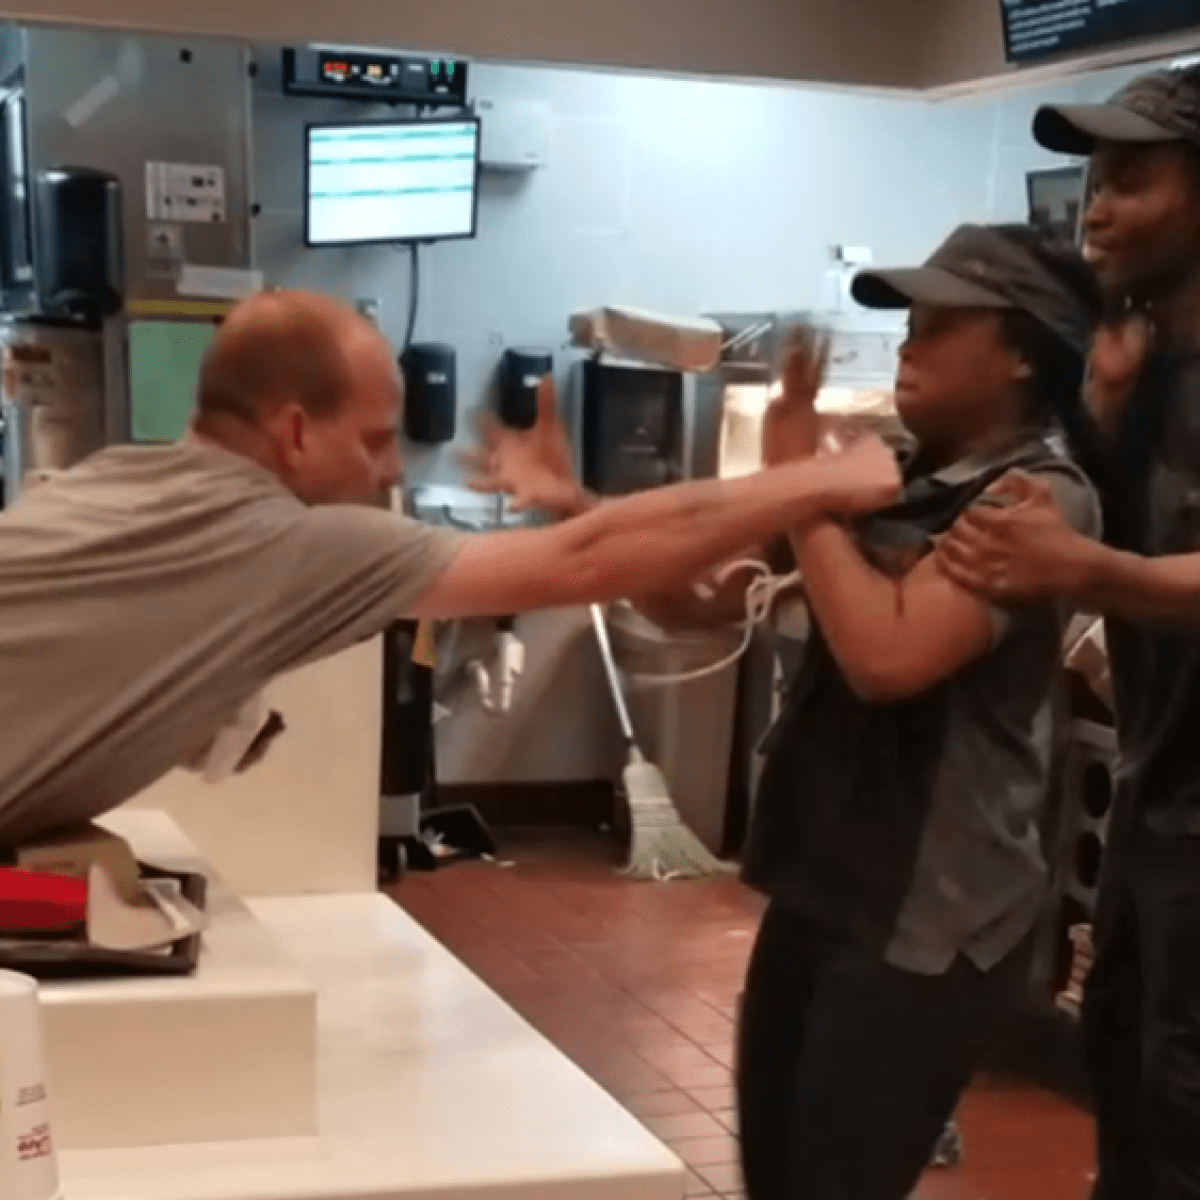 White Man Attacks Black Female McDonald's Employee Over a Straw